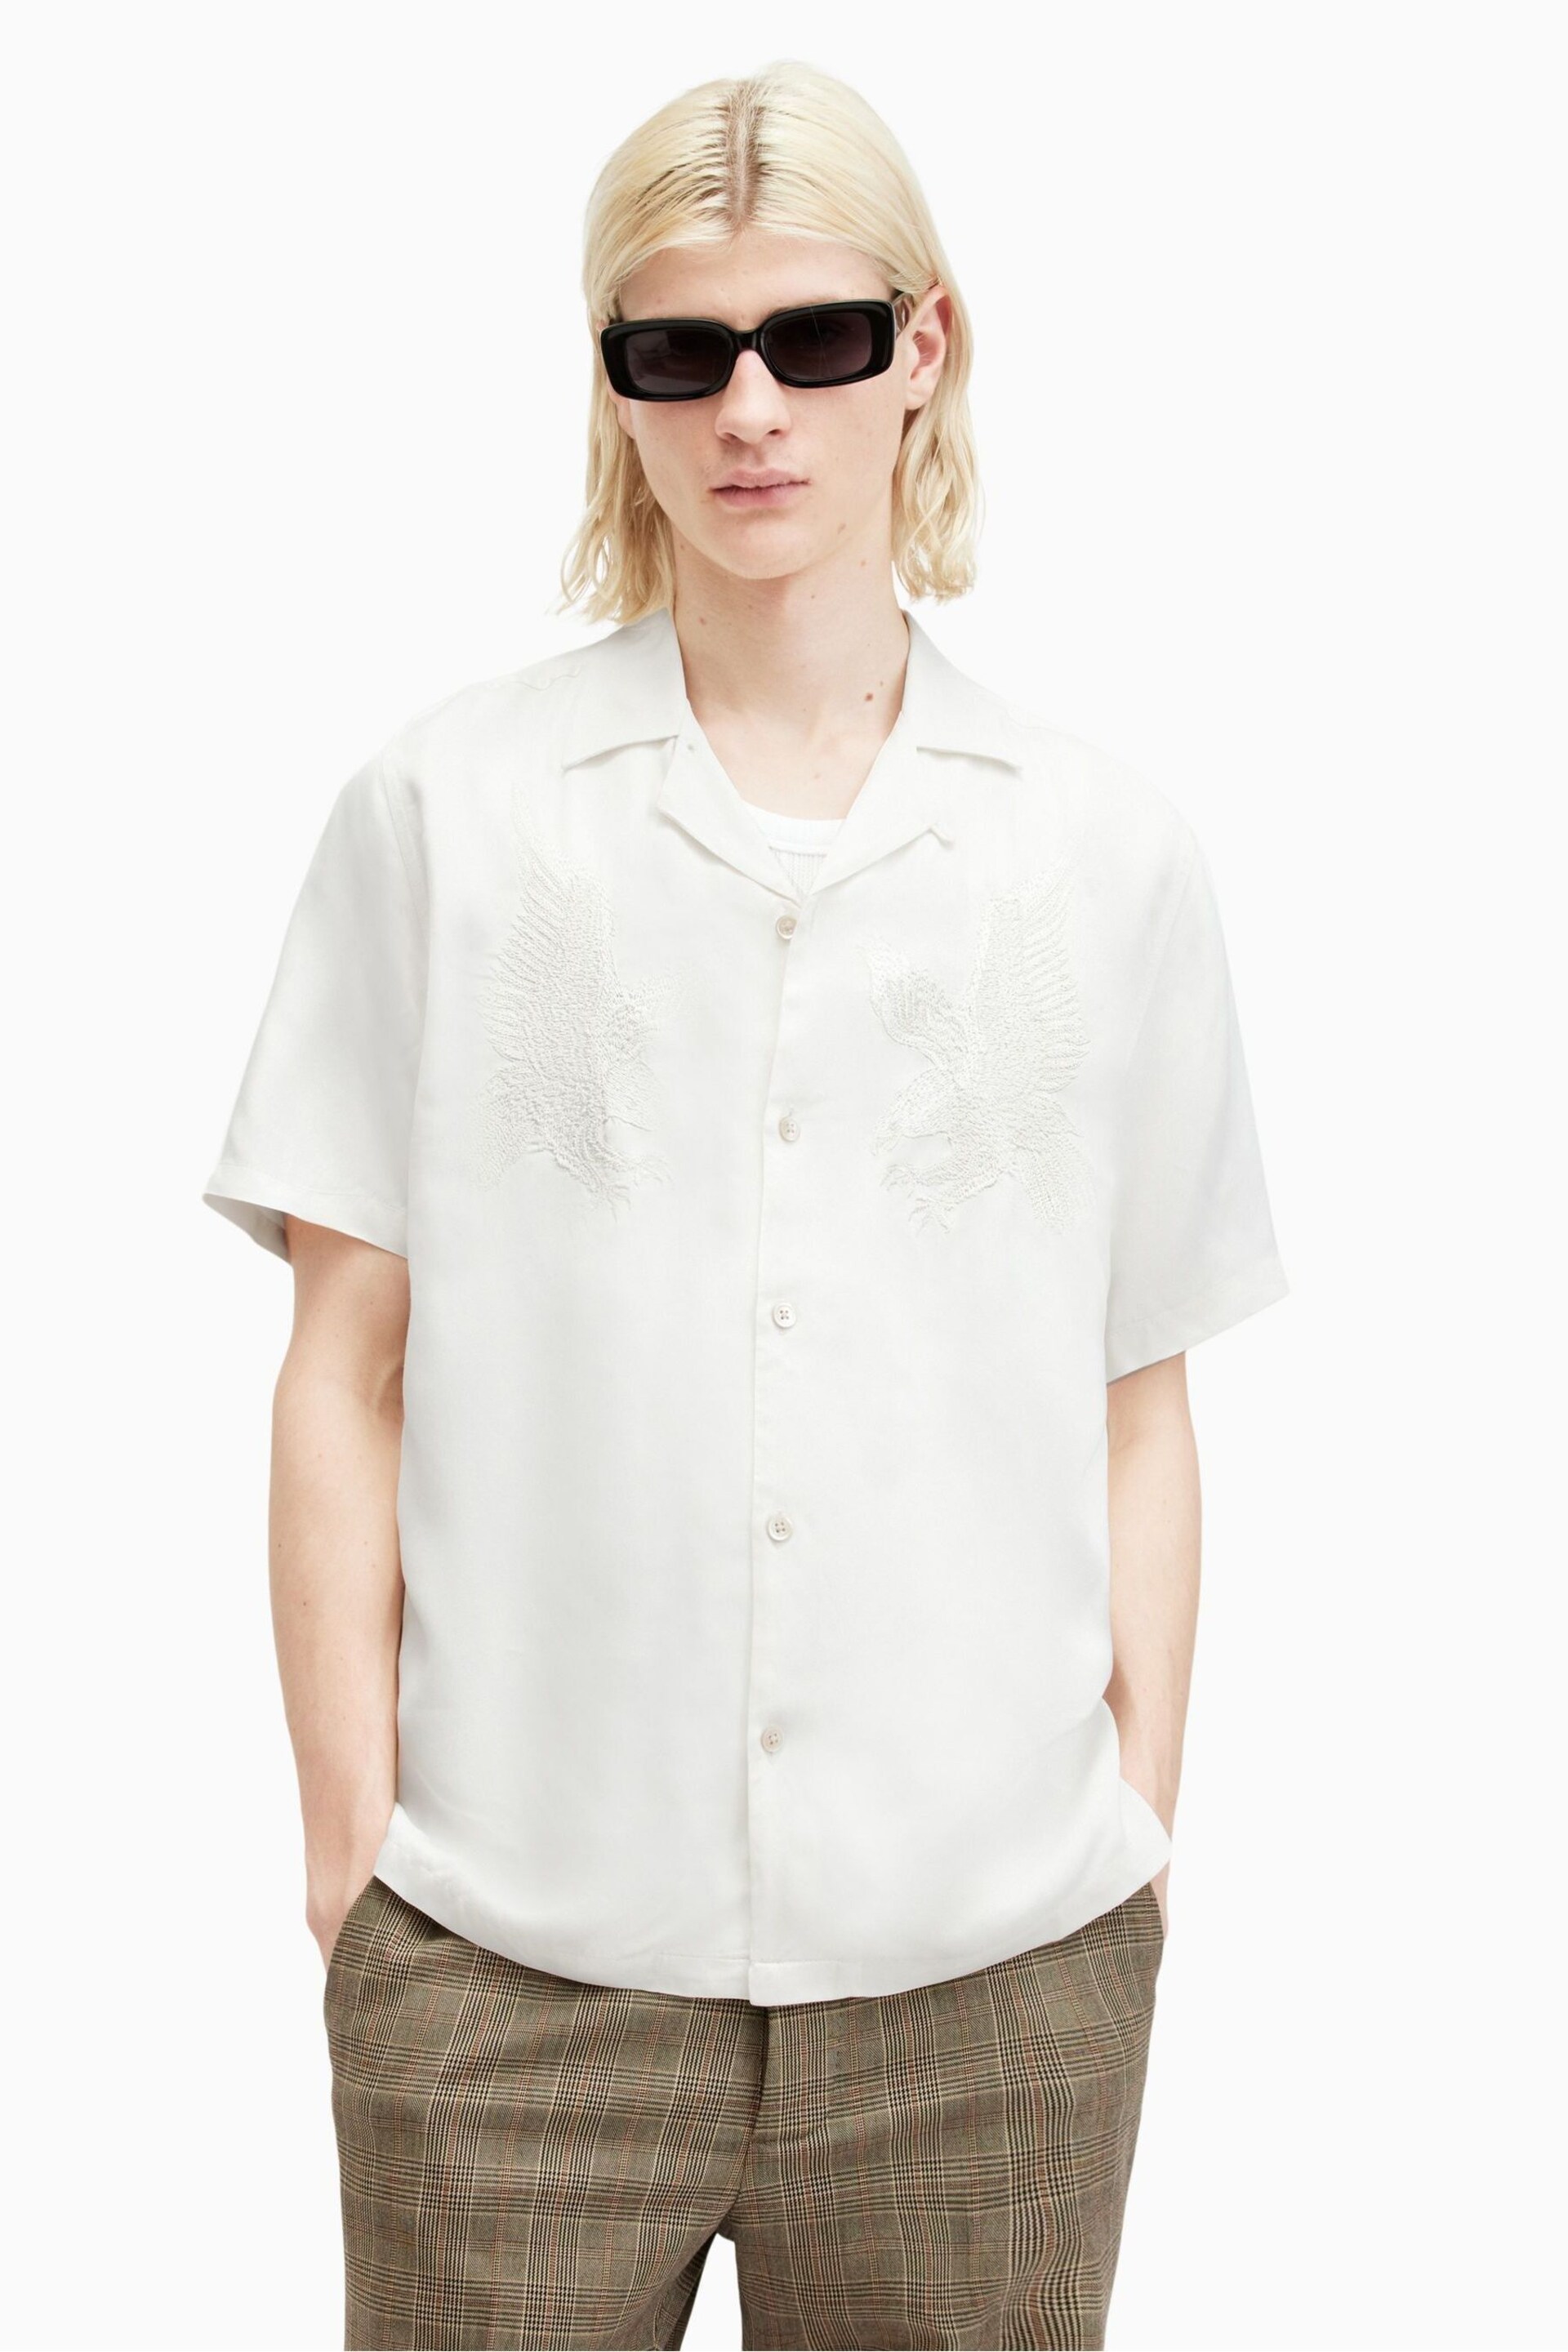 AllSaints White Aquila Short Sleeve Shirt - Image 1 of 7